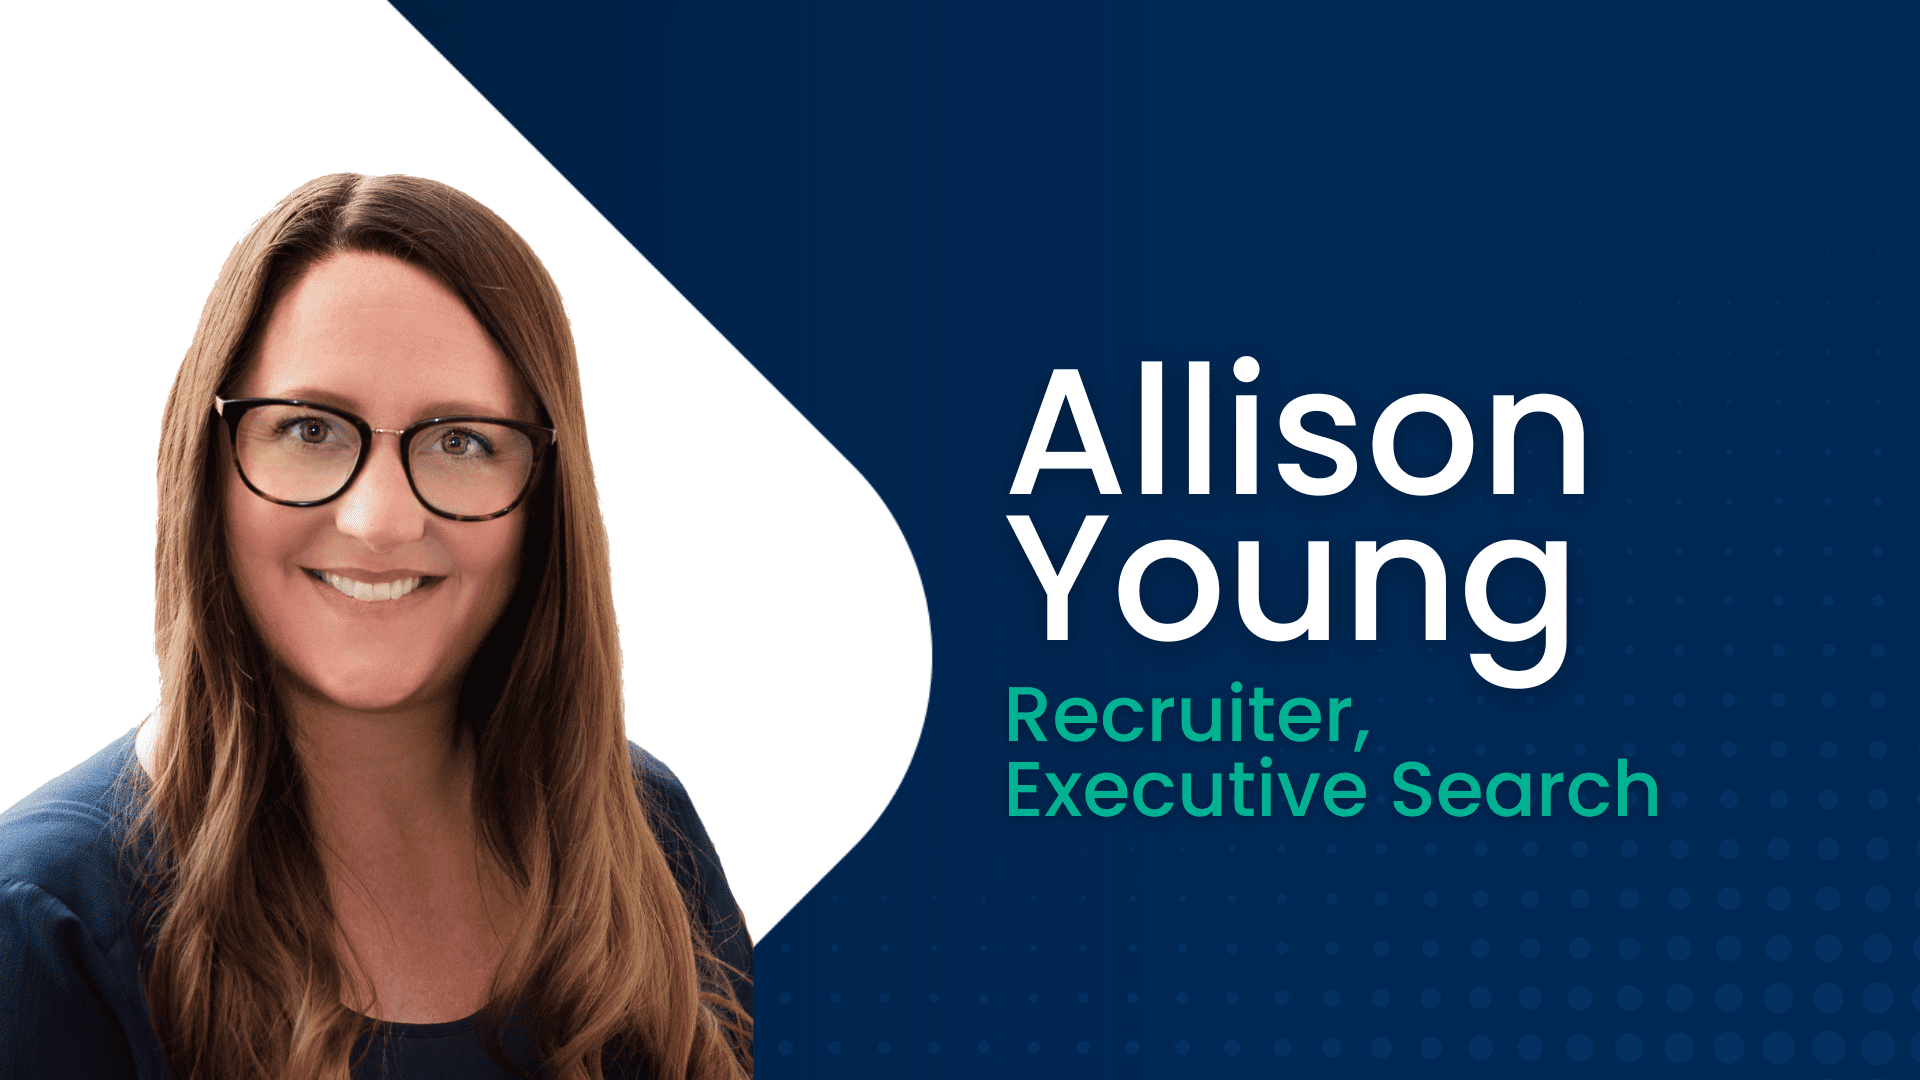 Allison Young, Executive Search Recruiter